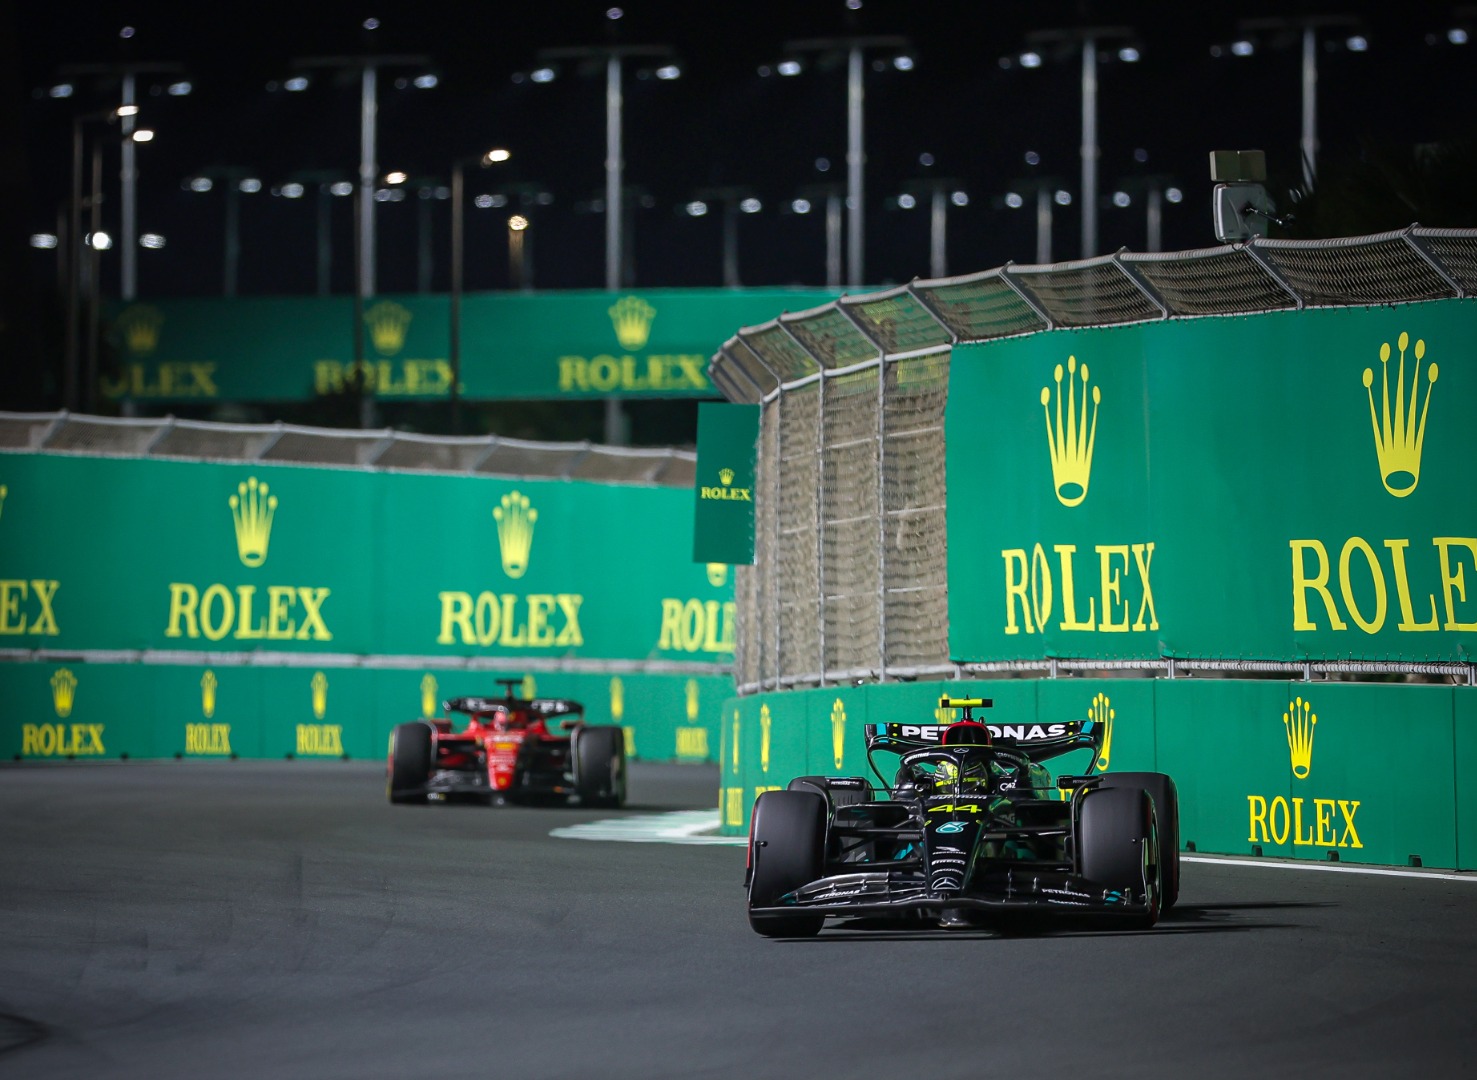 Sergio Perez Suudi Arabistan Grand Prix'sinde 'pole' pozisyonunu kaptı